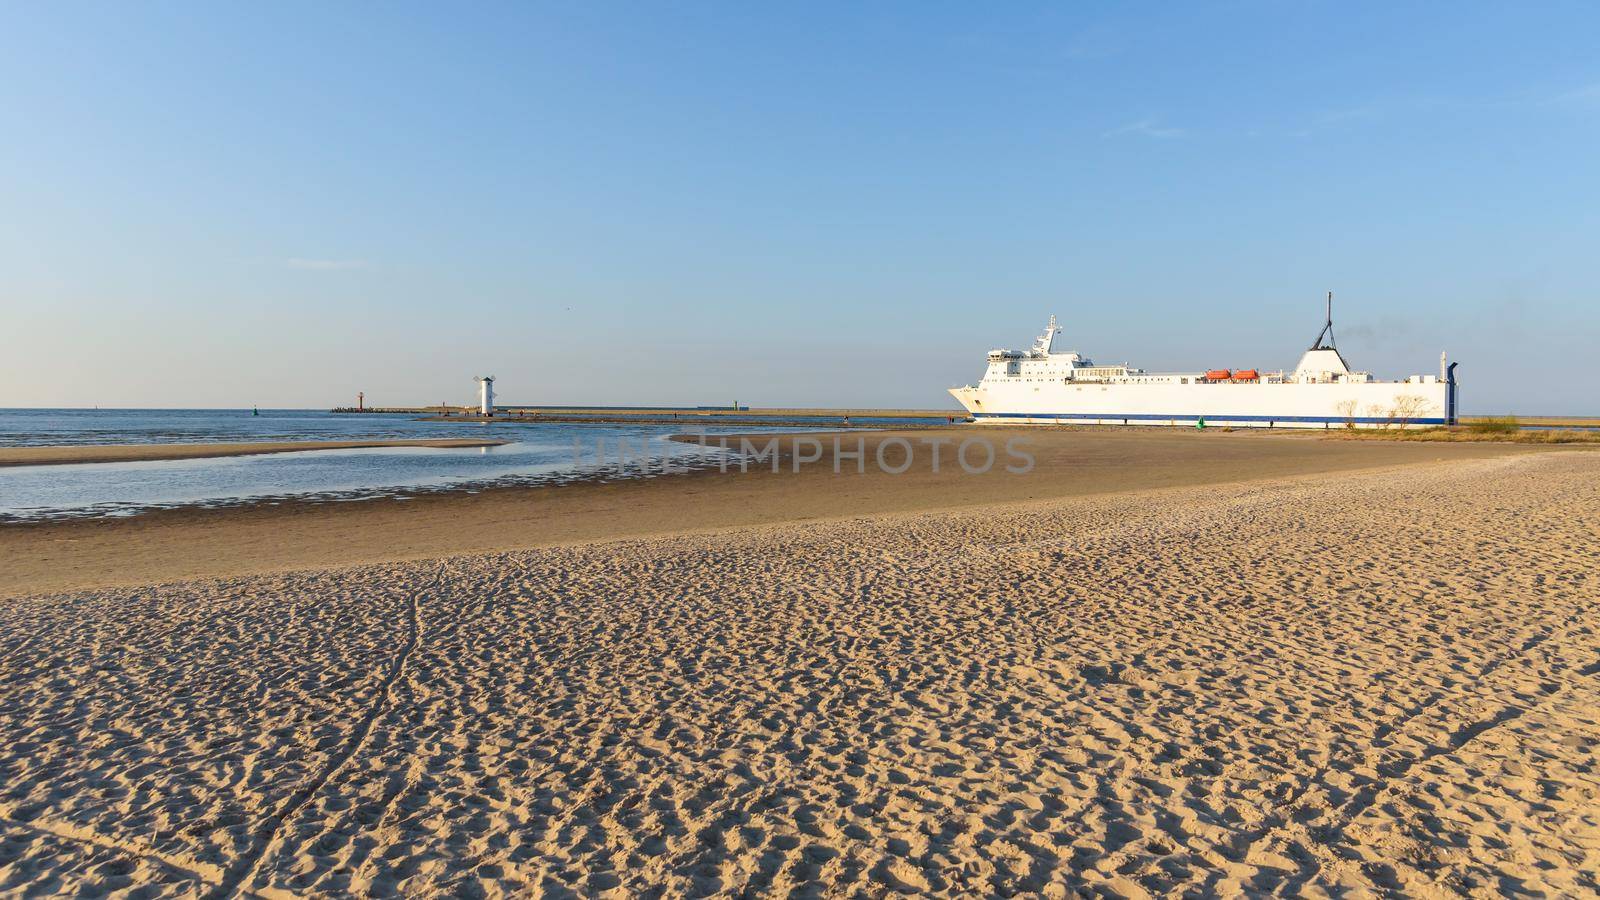 Big ferry leaving port of Swinoujscie by mkos83